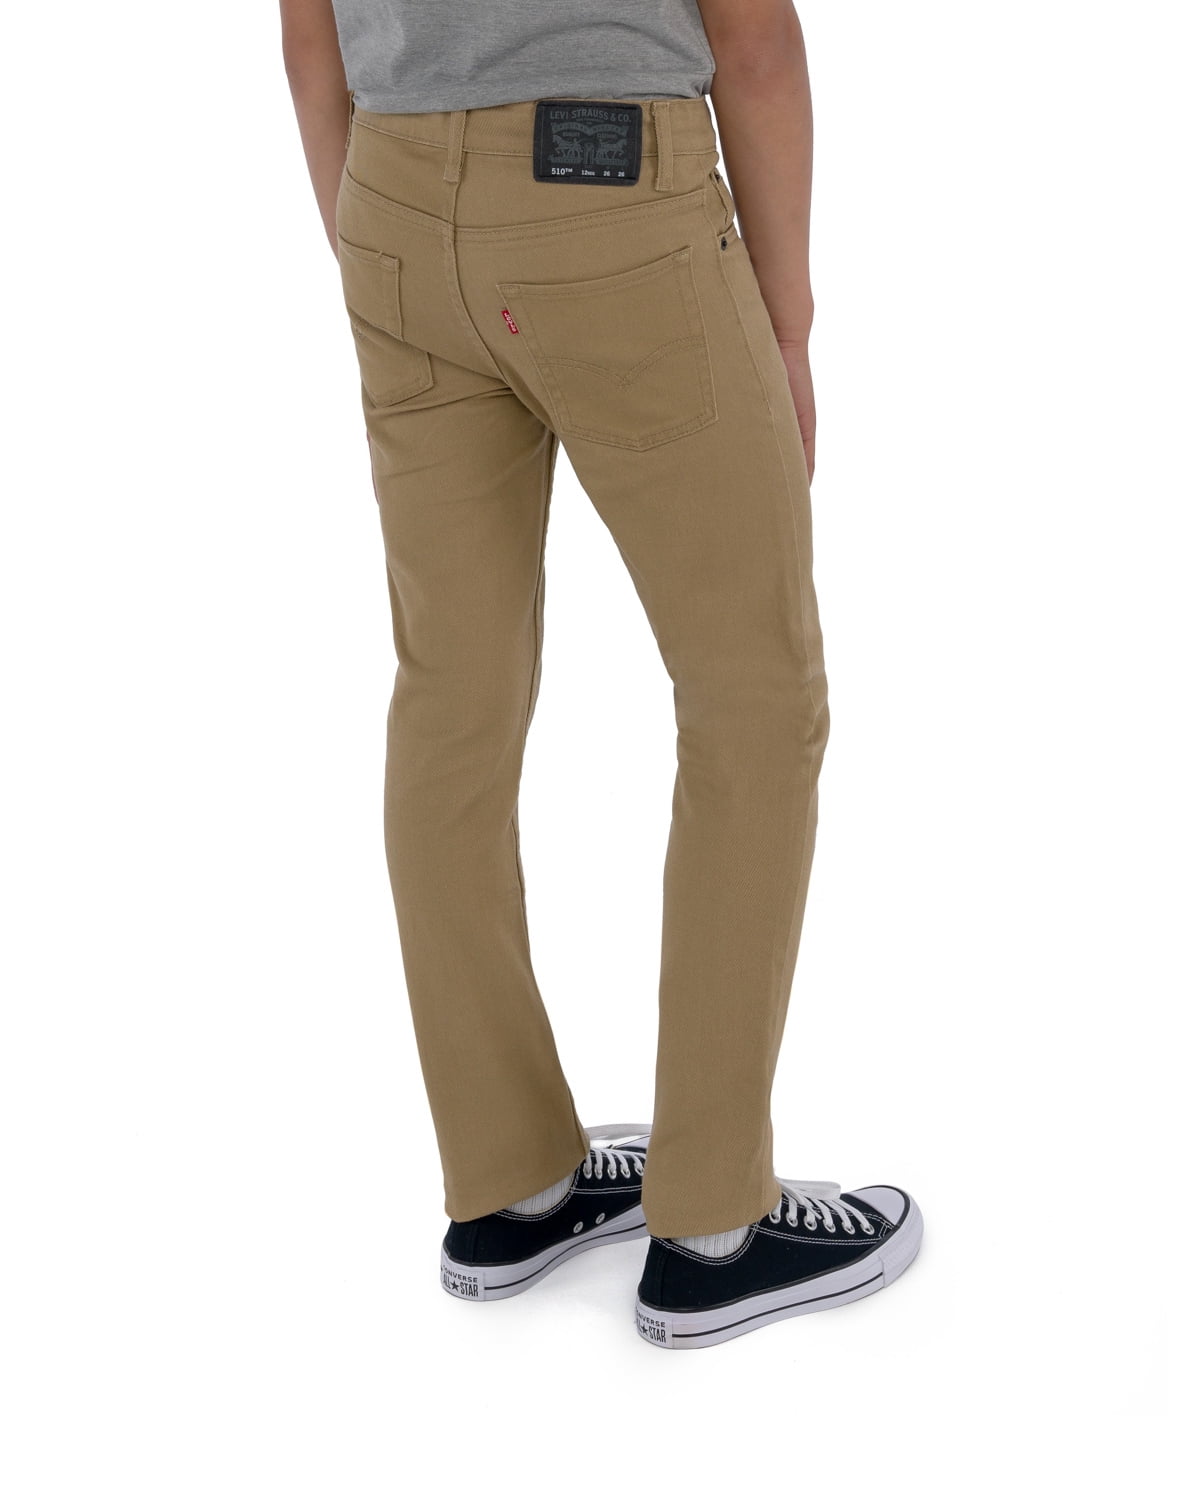 Levi's Boys' Skinny Fit Performance Jeans, Sizes 4-20 - Walmart.com